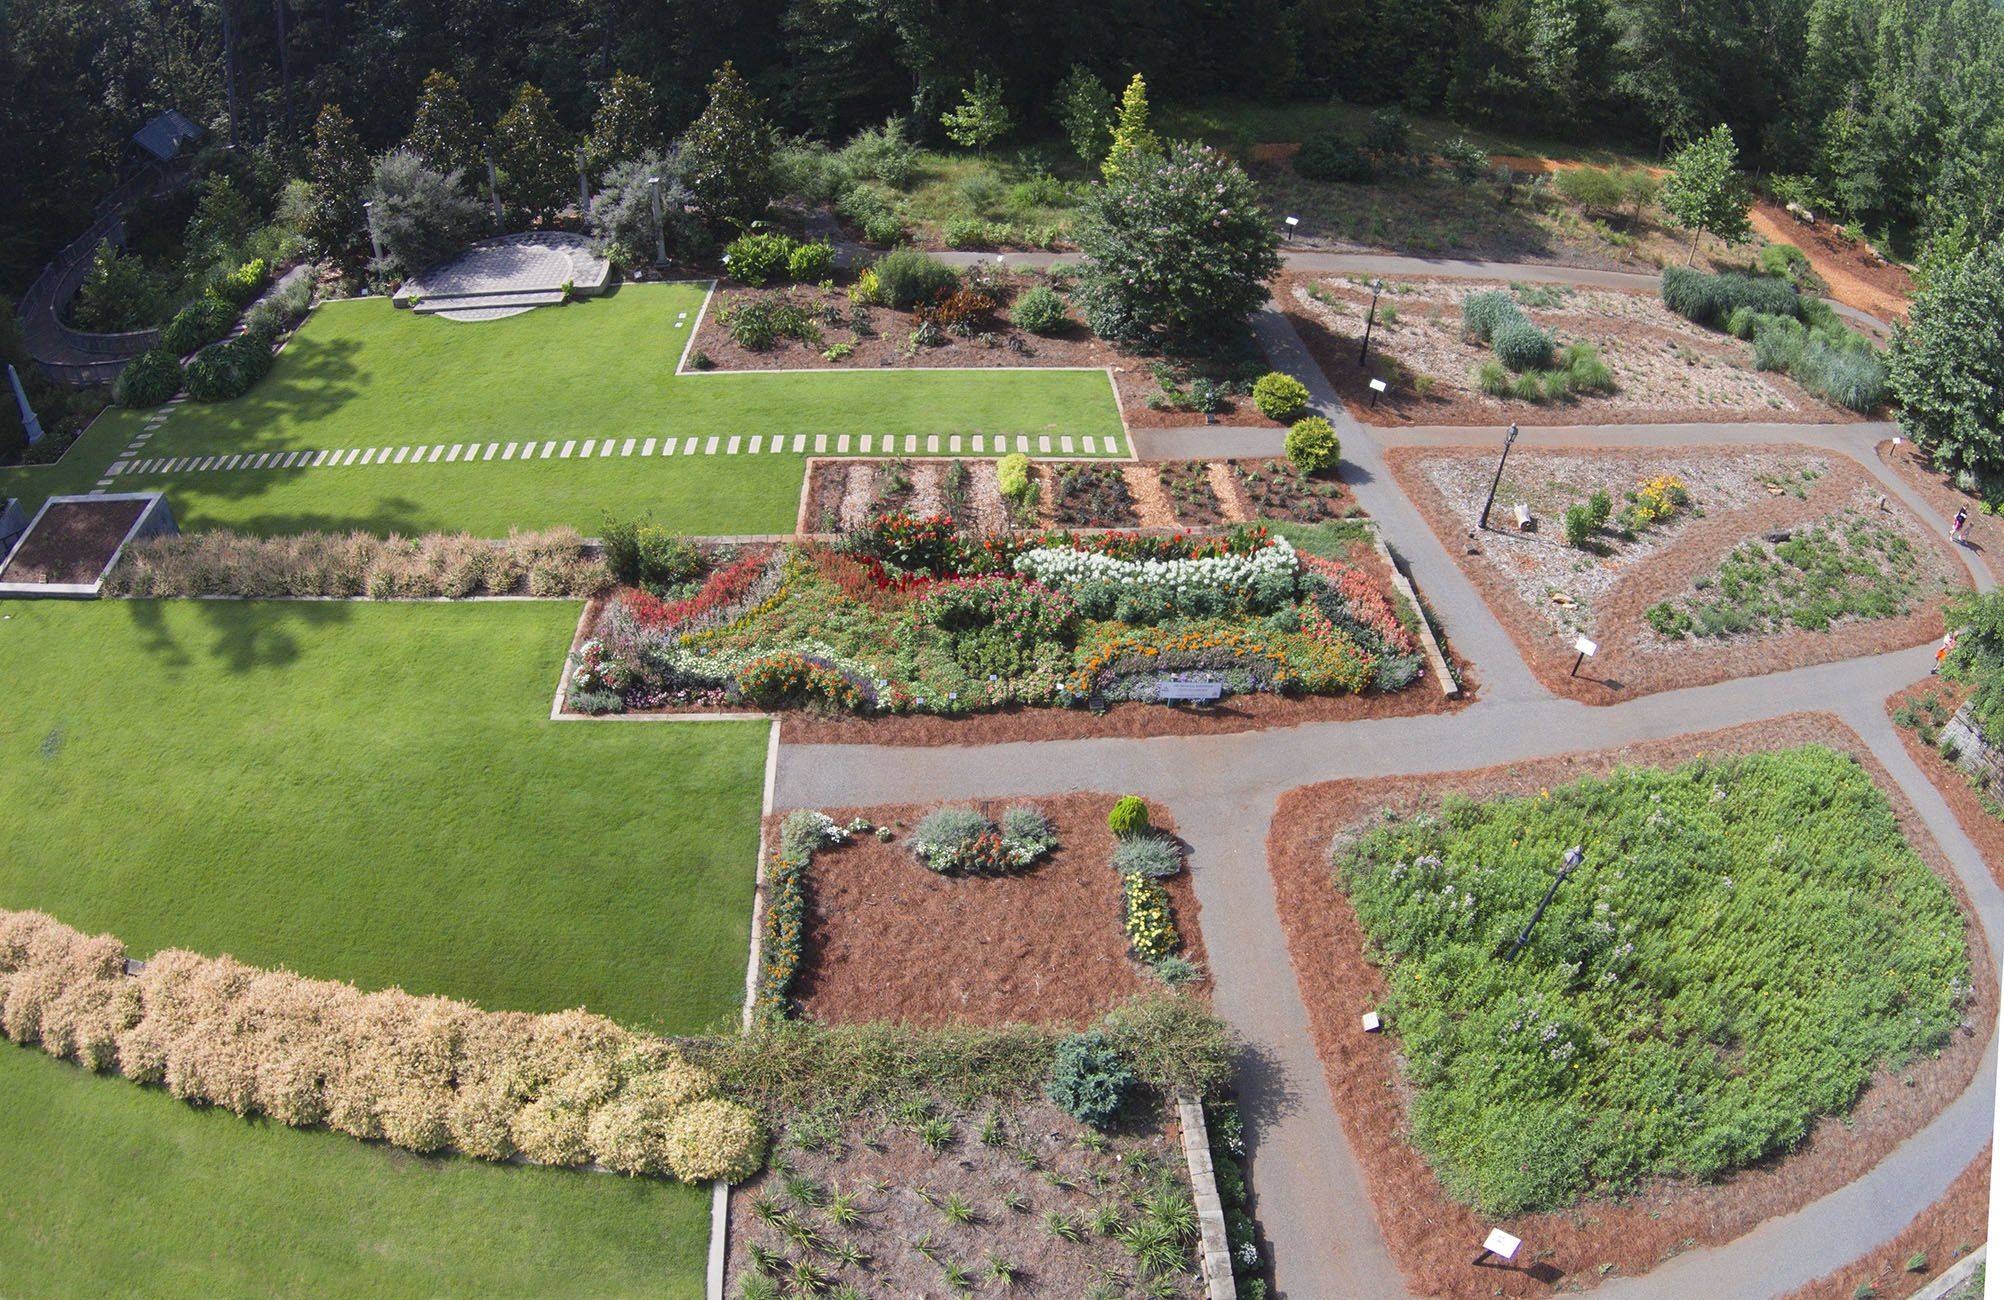 The State Botanical Garden